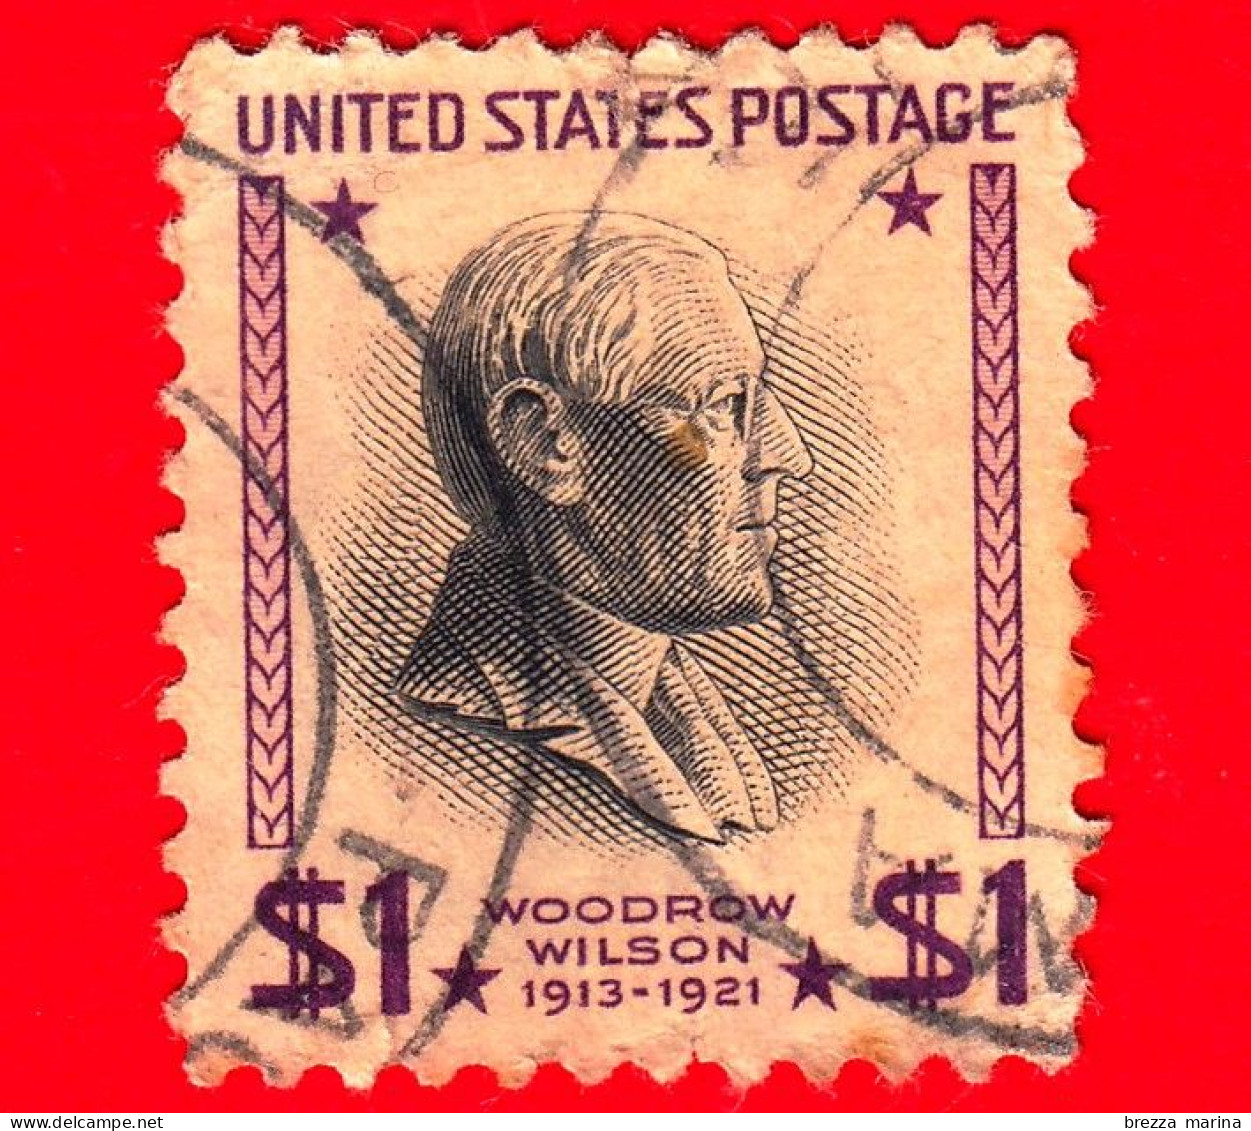 USA - STATI UNITI - Usato - 1938 - Woodrow Wilson (1856-1924), 28° Presidente Degli Stati Uniti - 1 - Gebraucht